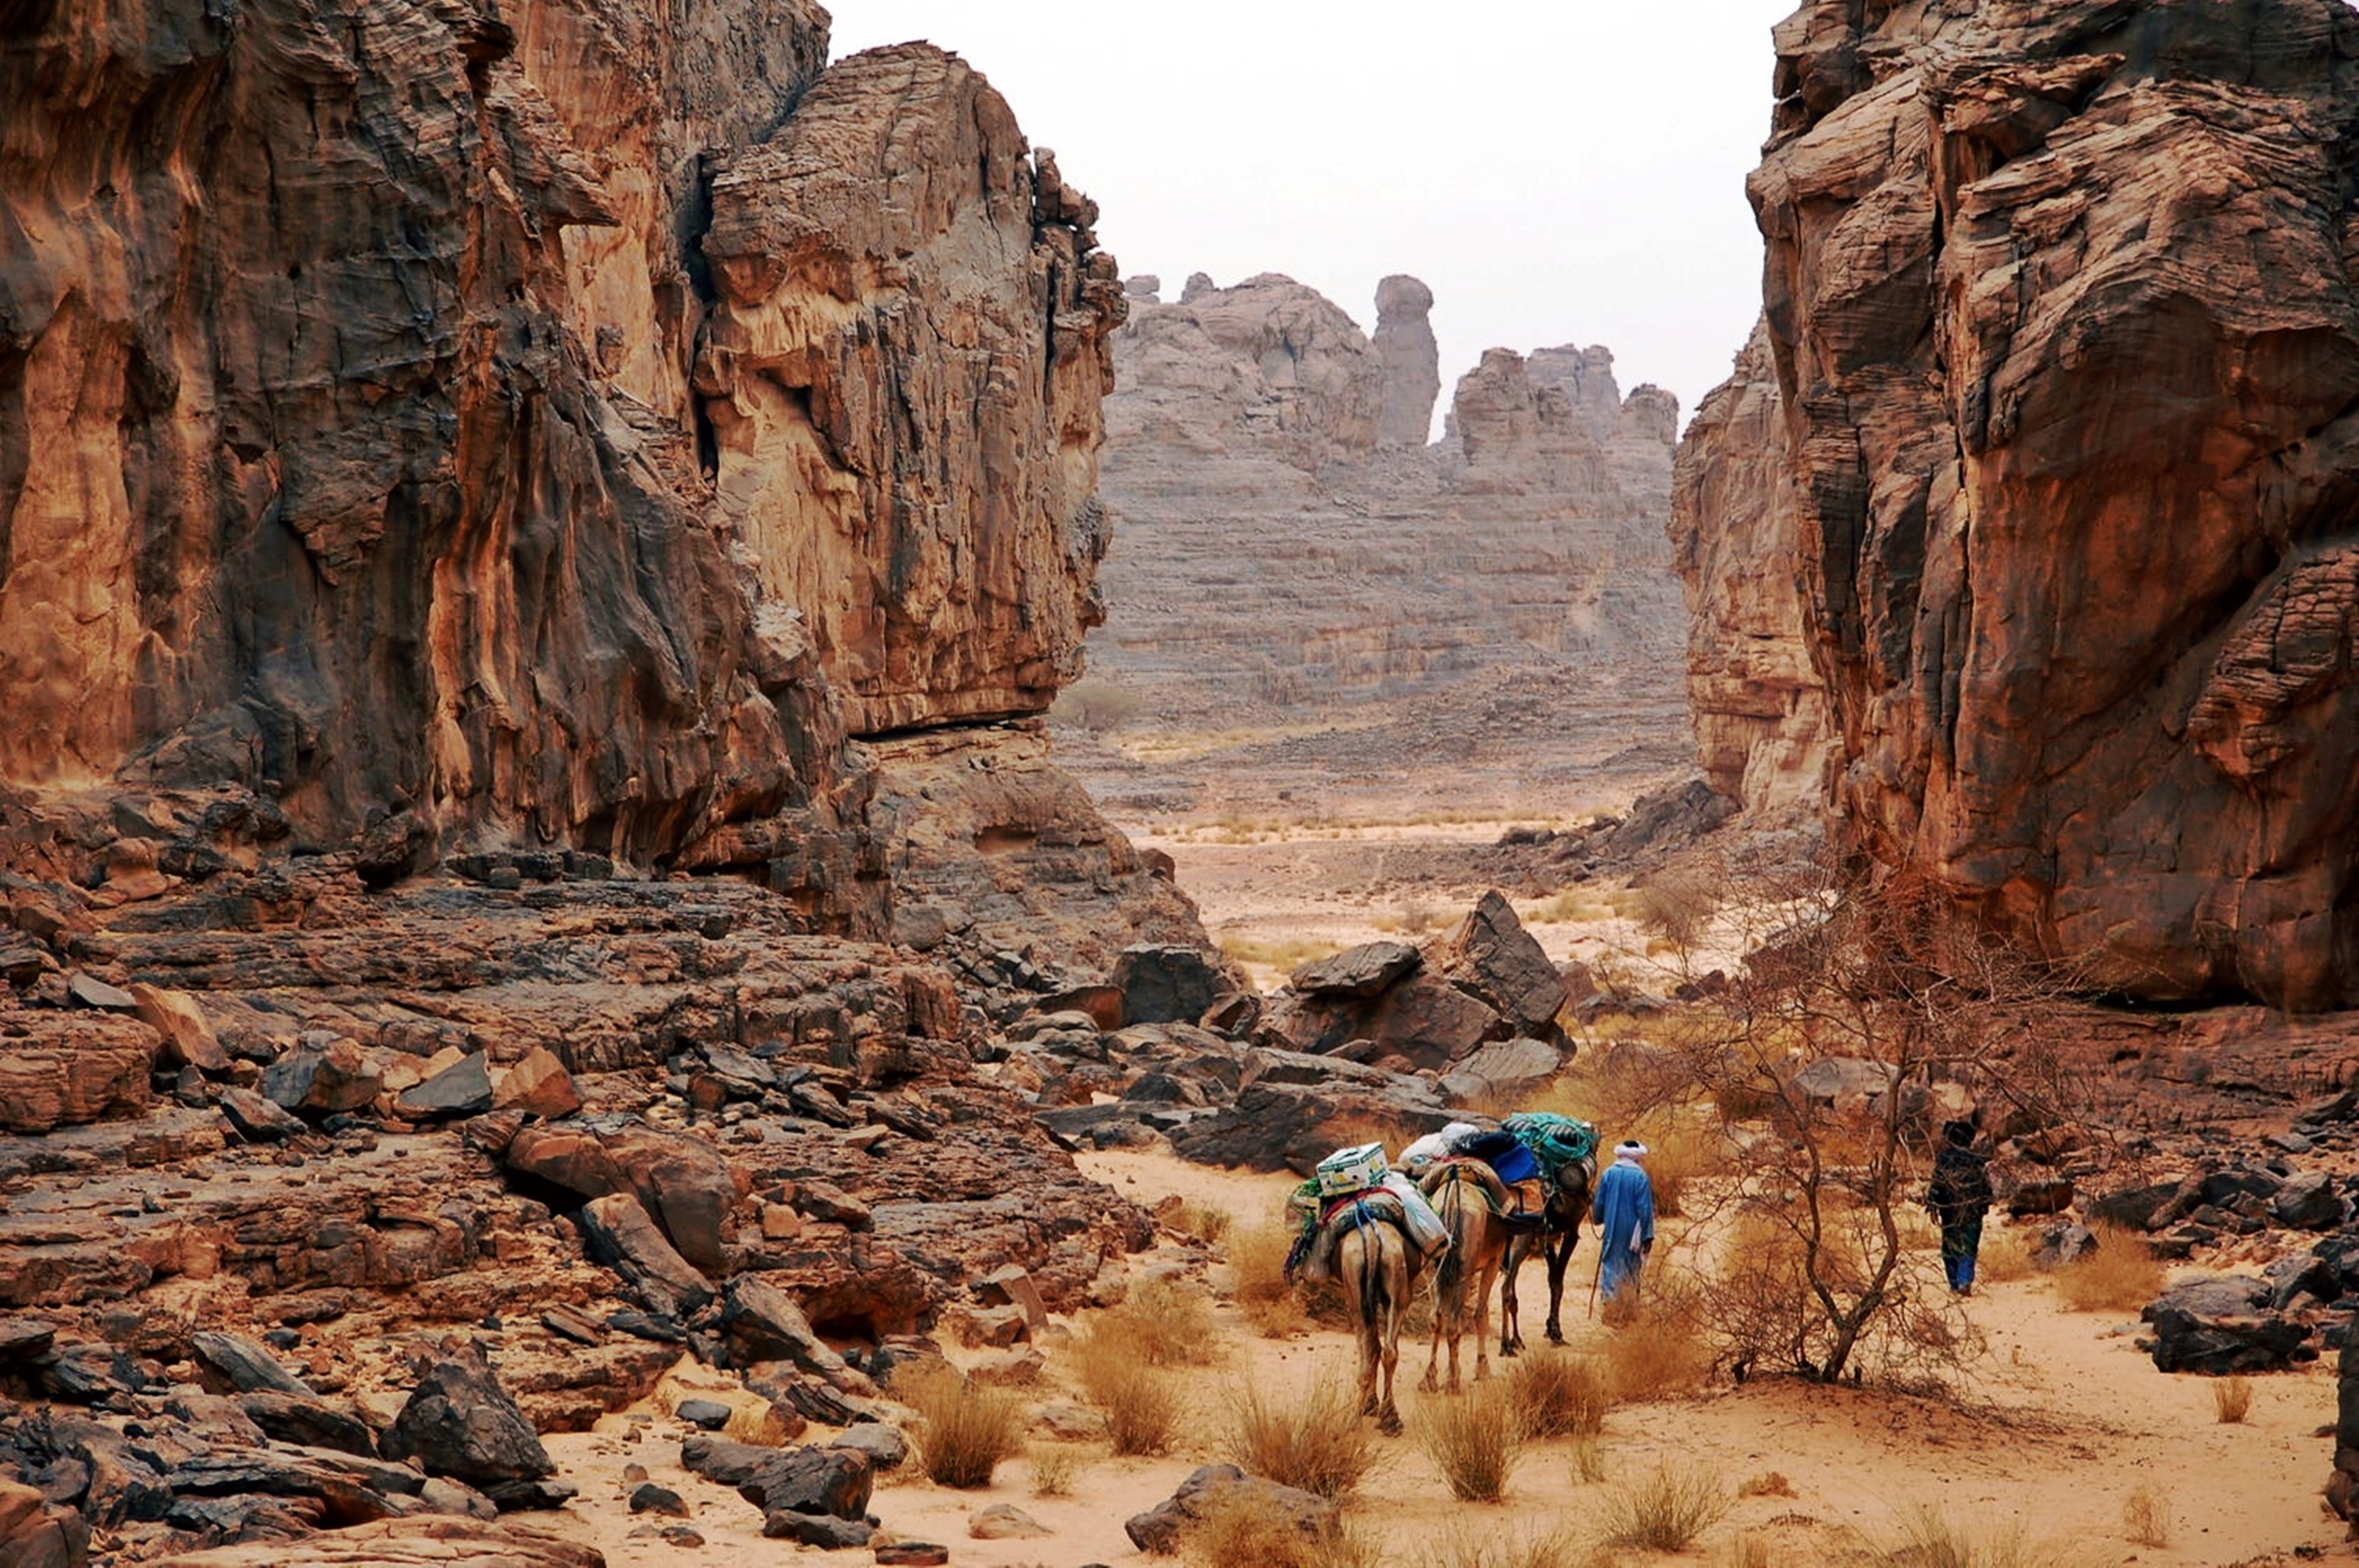 photography, caravan, africa, algeria, camel, desert, hoggar mountains, national park, sahara, stone, tassili n'ajjer, tuareg